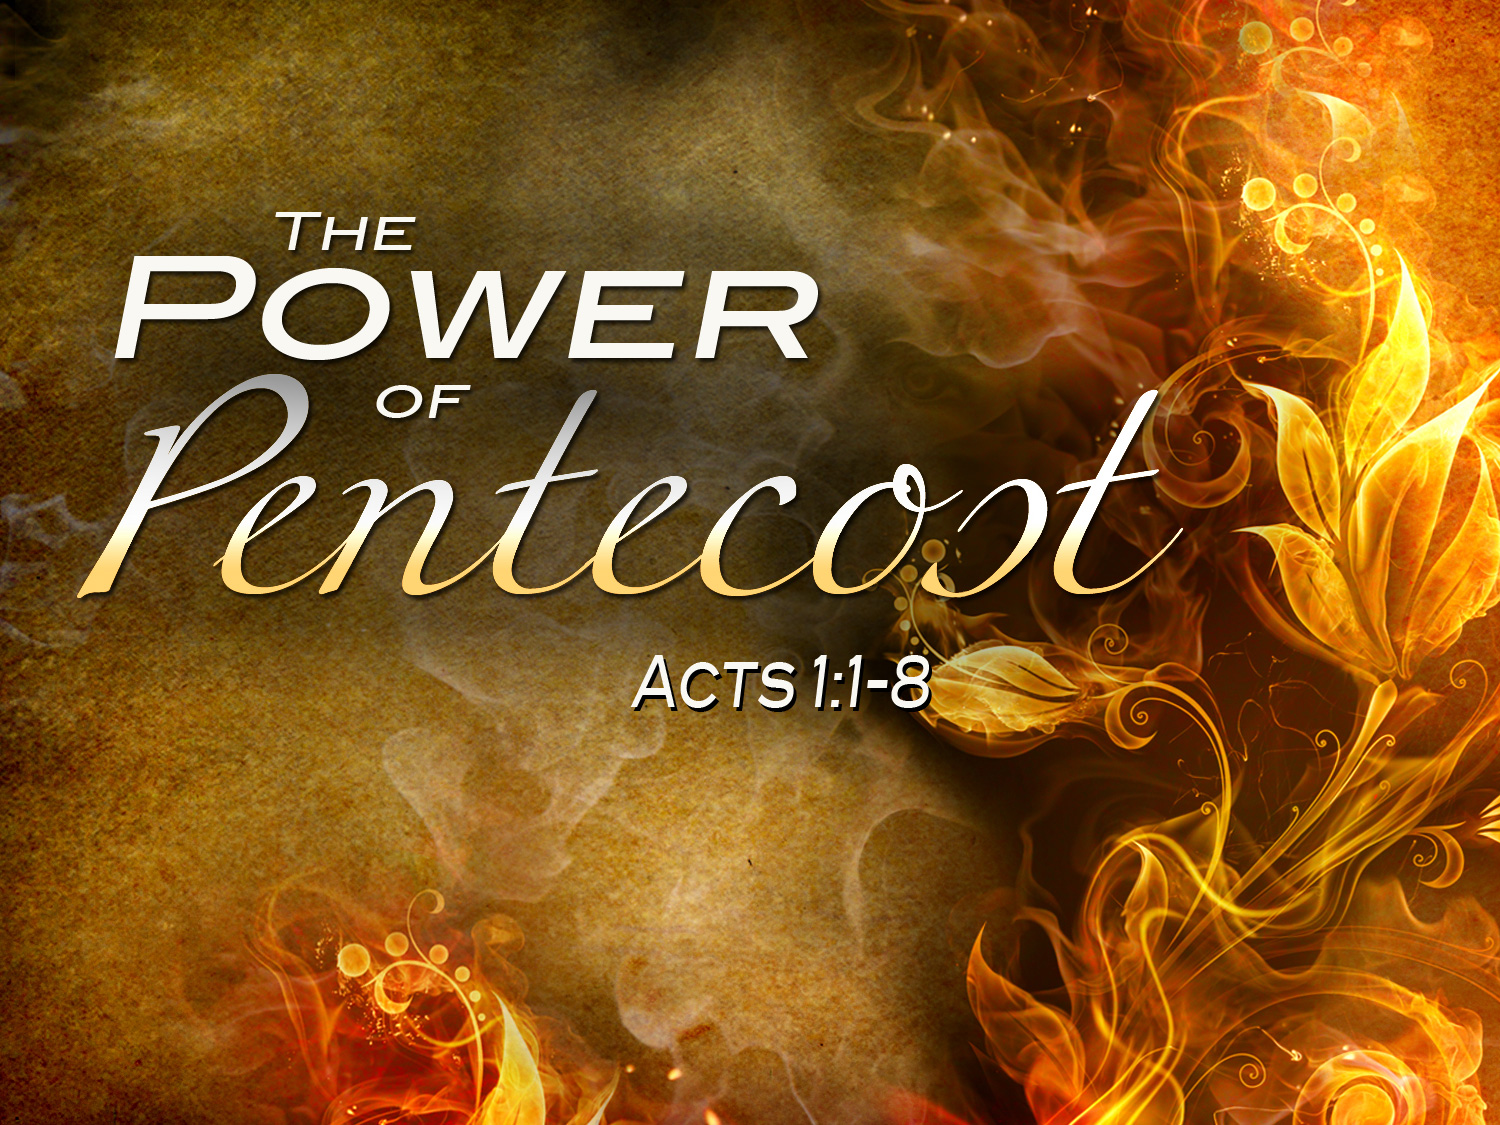 Pentecost Pictures Wallpaper Pics Image